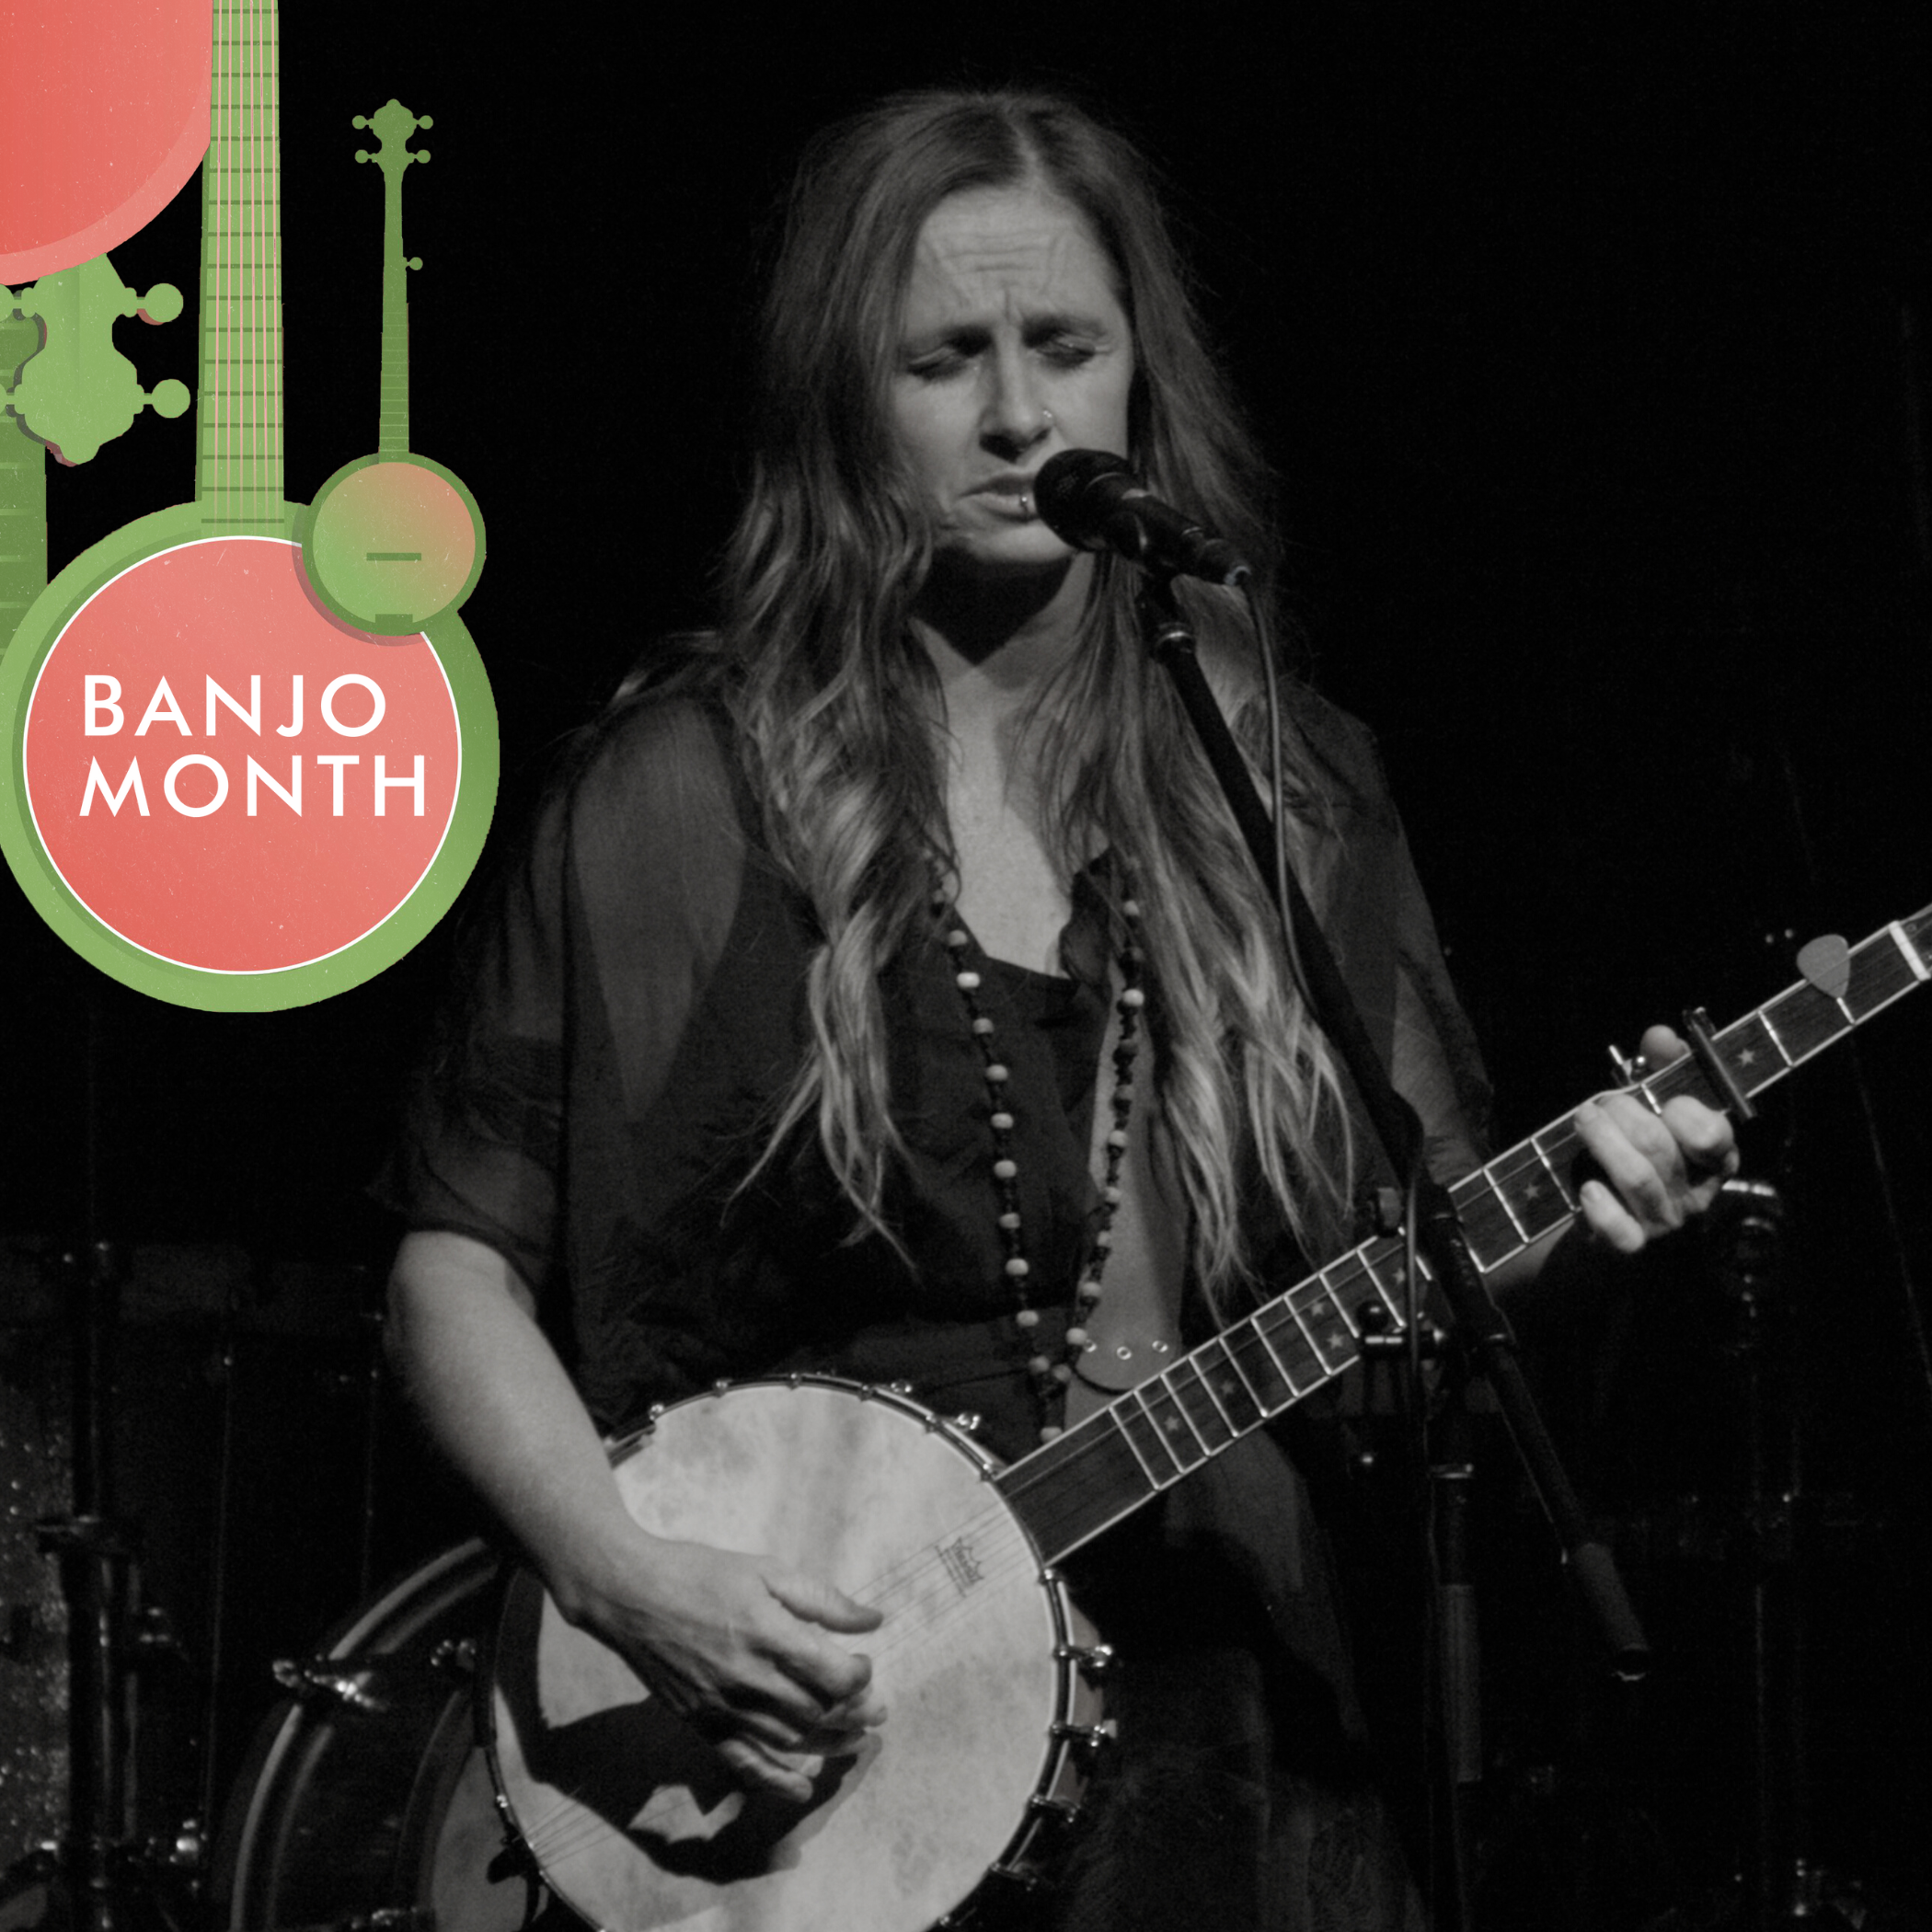 Wes Corbett's Banjo Needs: 10 Songs That Make Him Happy